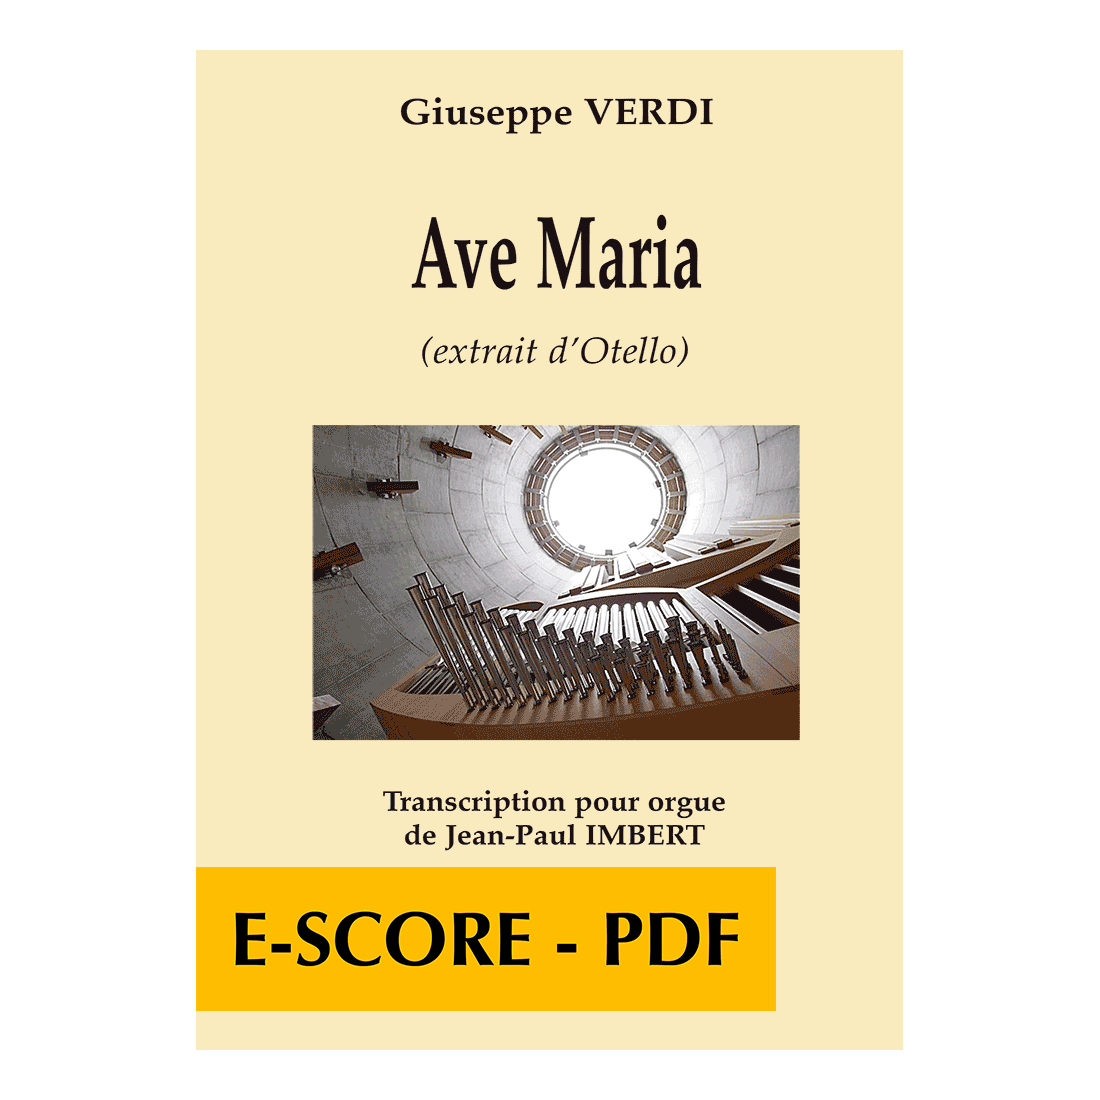 Ave Maria (Auszug aus Otello) für Orgel - E-score PDF